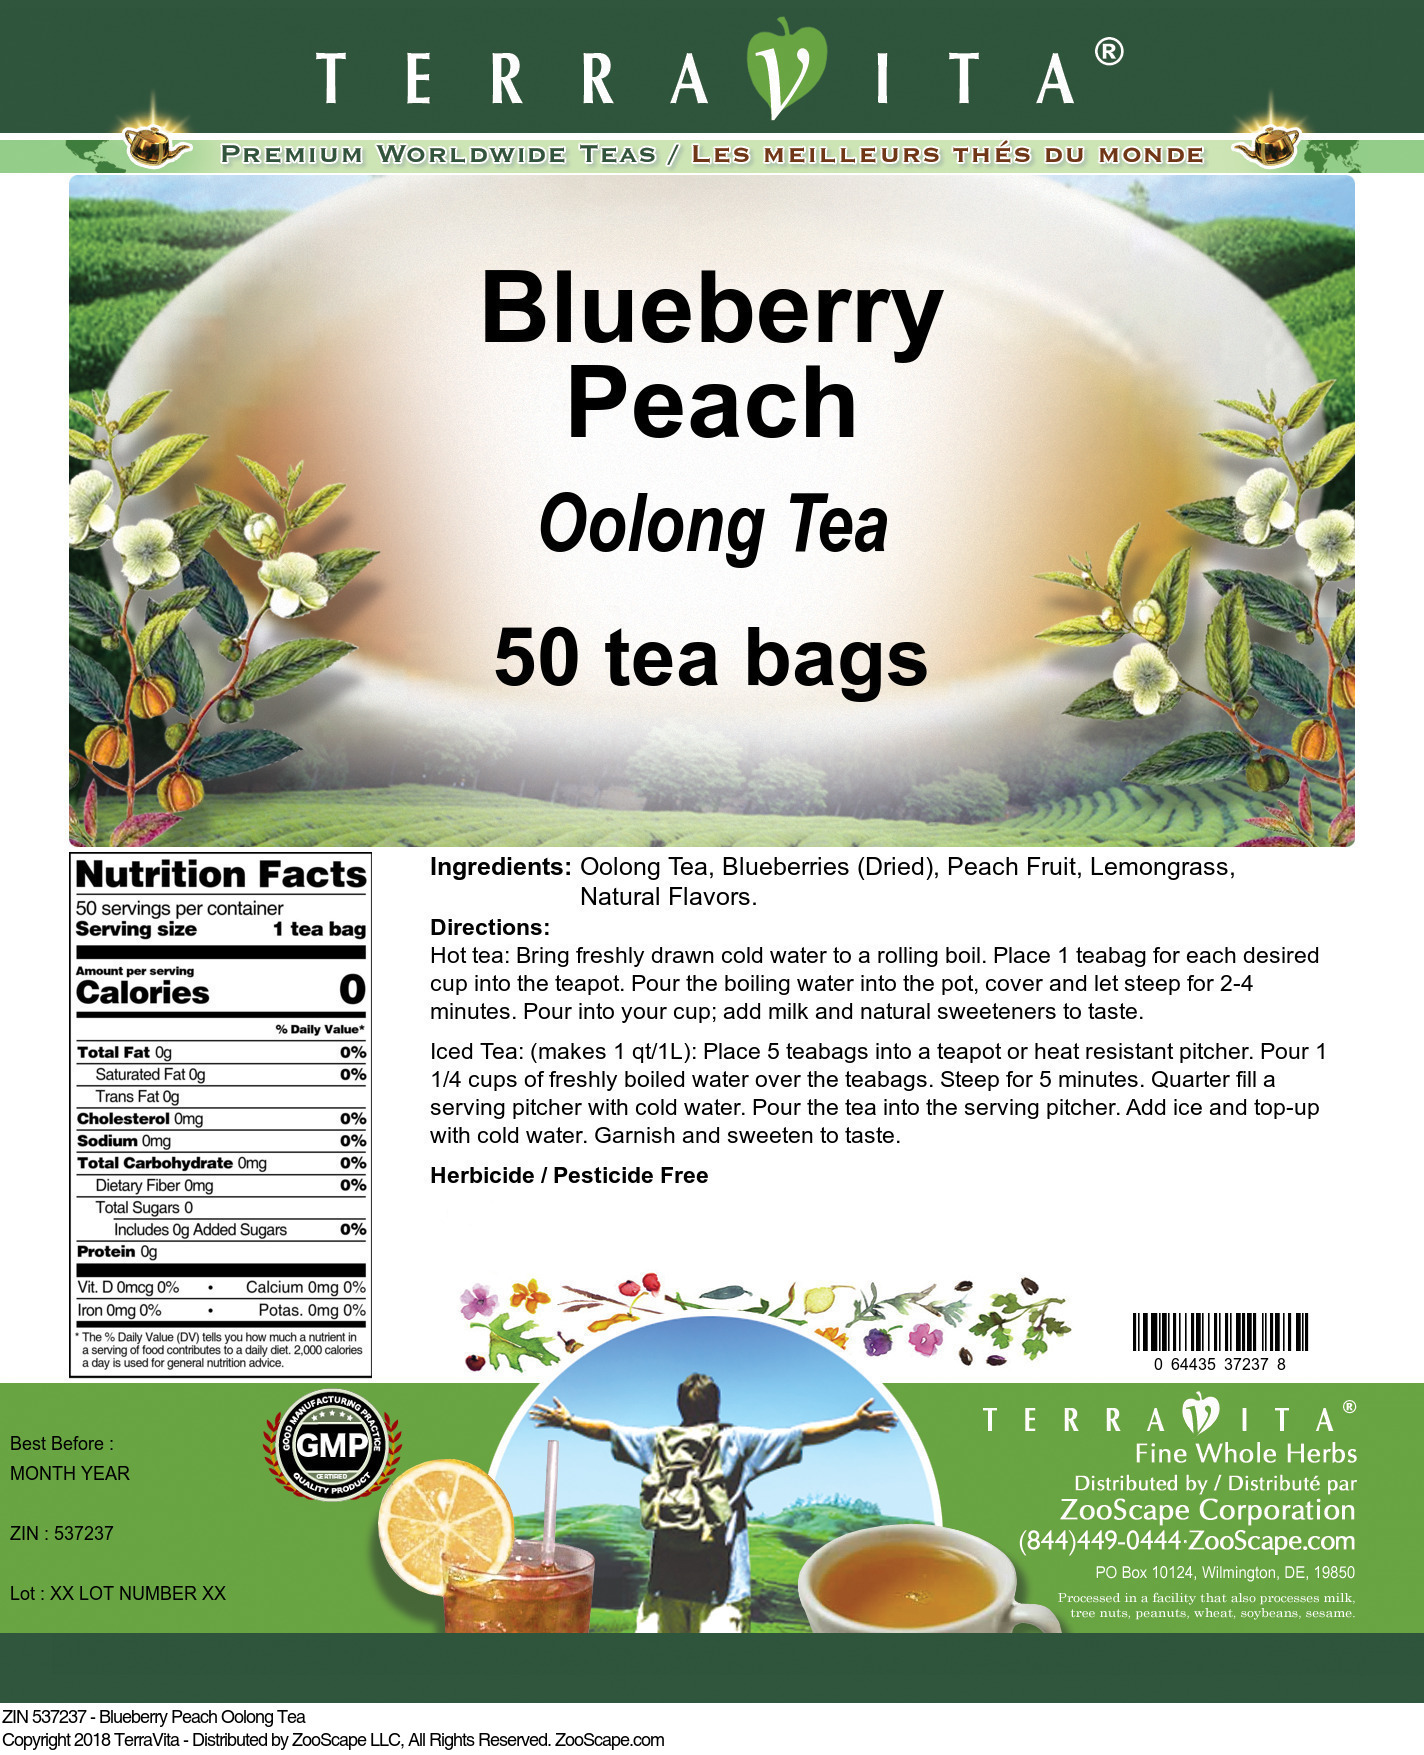 Blueberry Peach Oolong Tea - Label